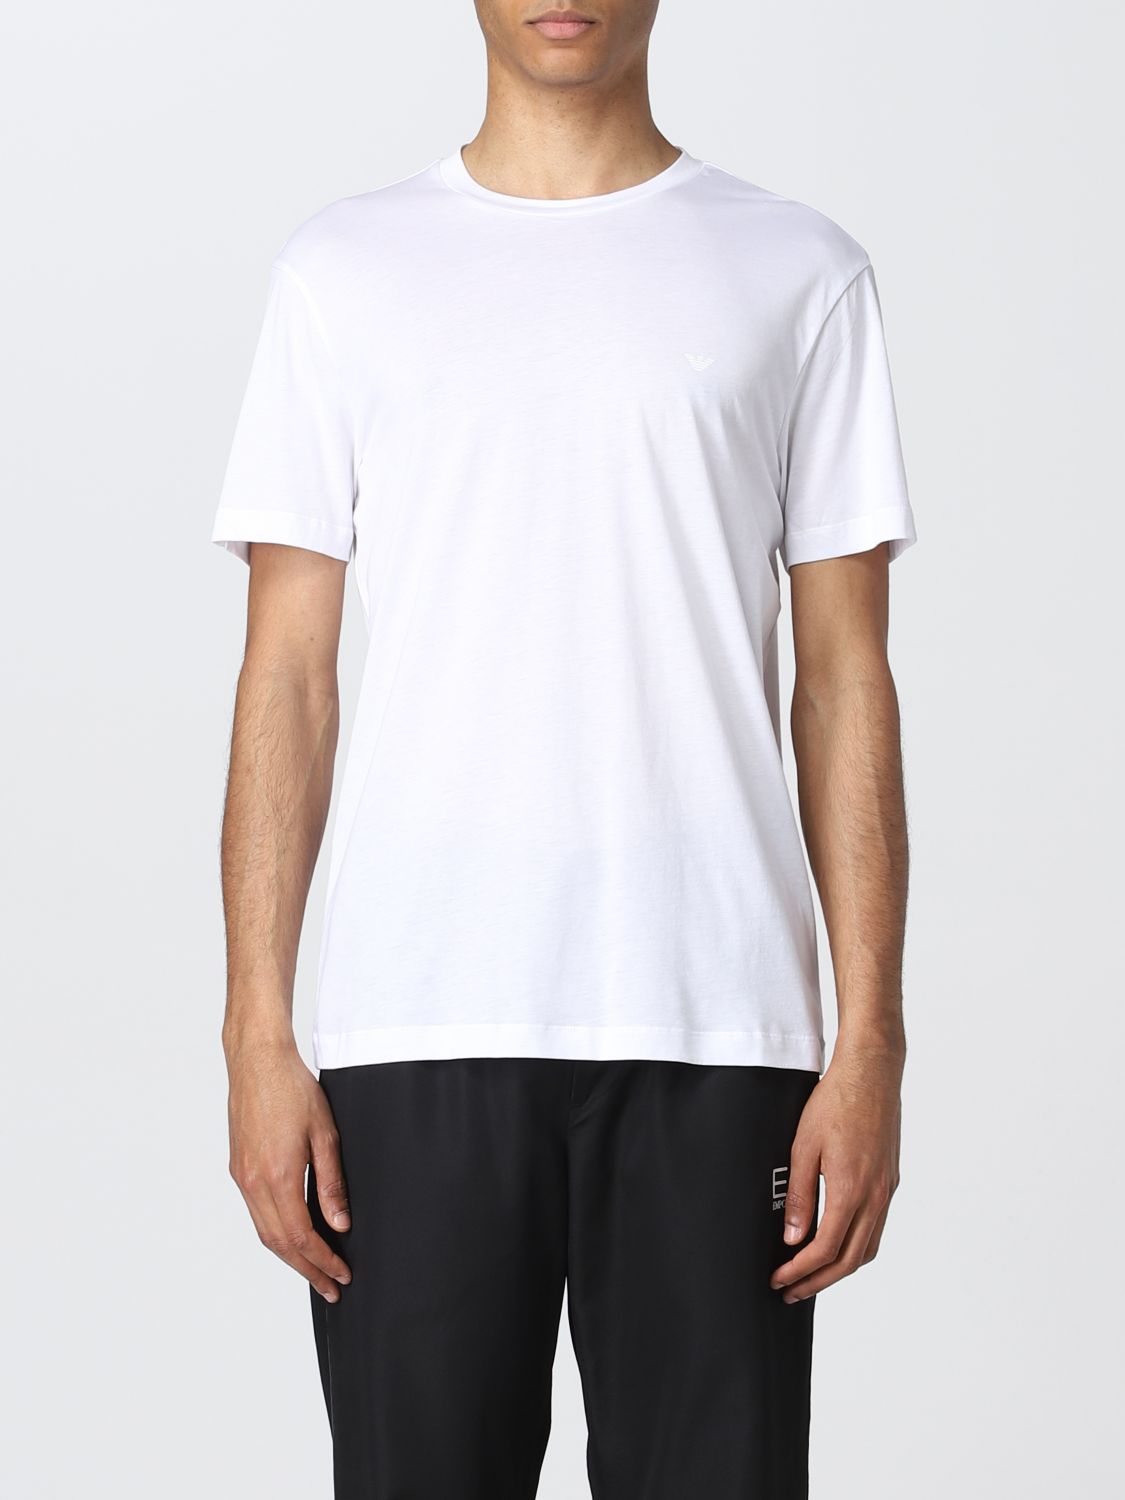 EMPORIO ARMANI: basic t-shirt - White | Emporio Armani t-shirt ...